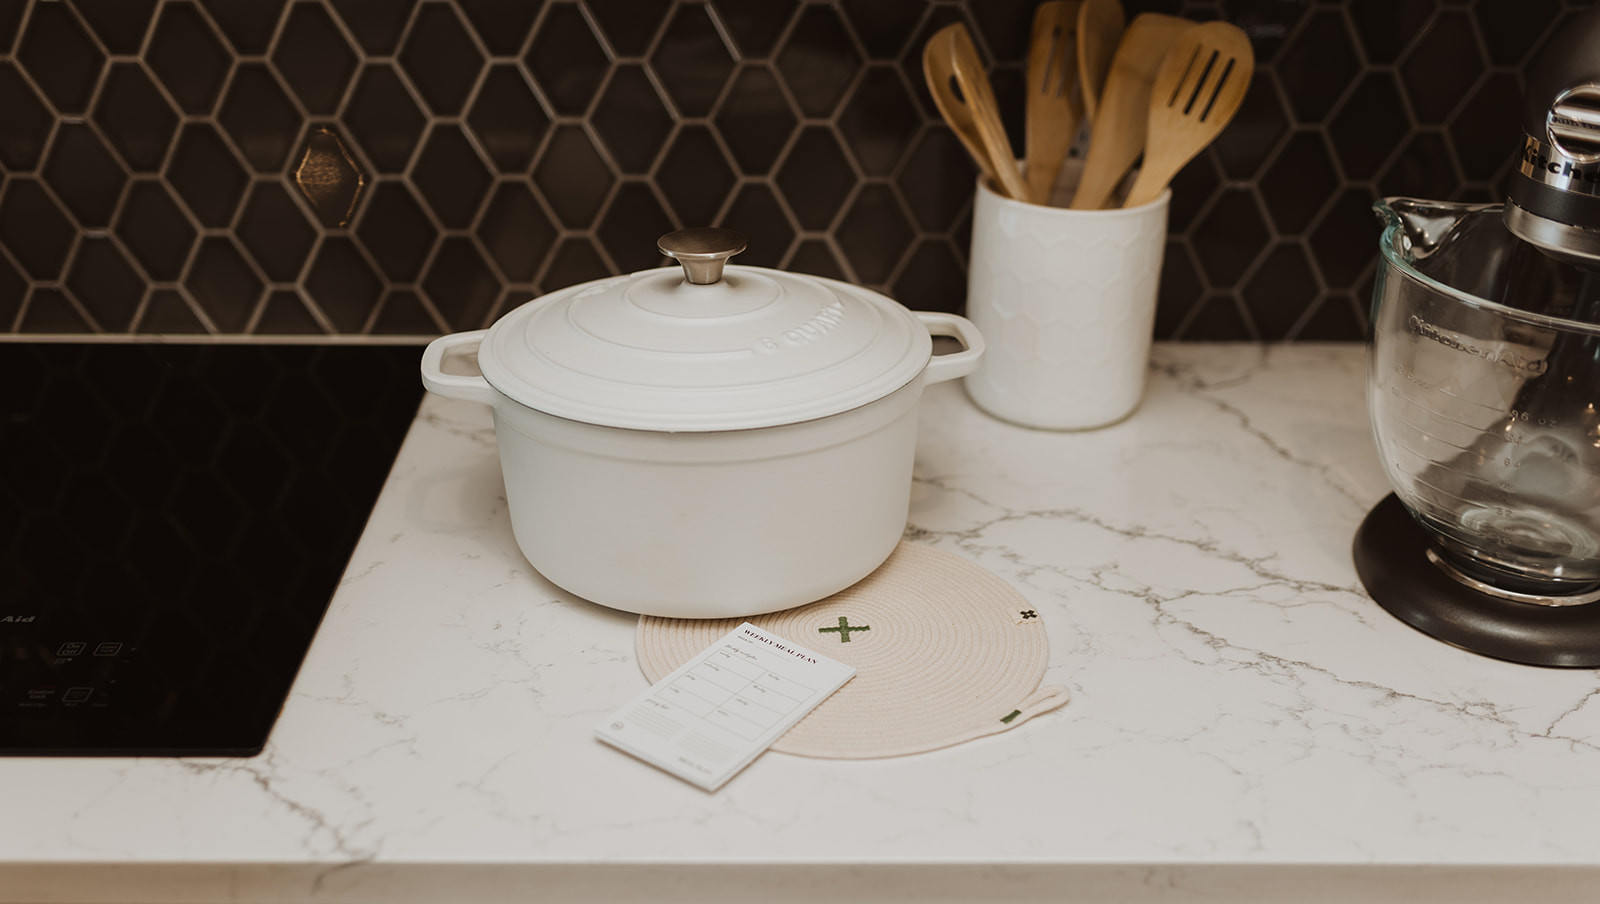 kitchen counter with white pot, wooden utensils and black tiled backsplash